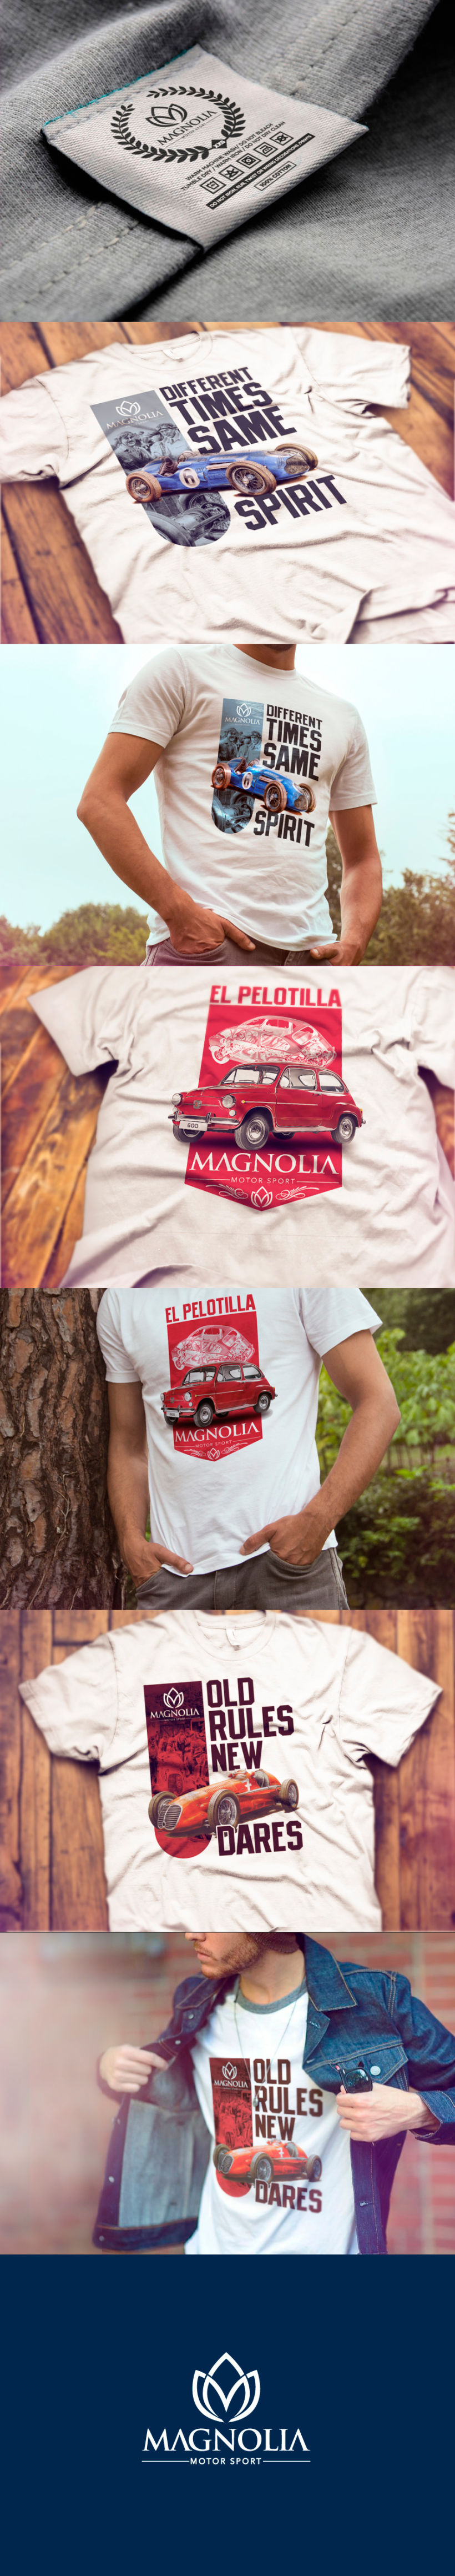 Magnolia T-shirt 0